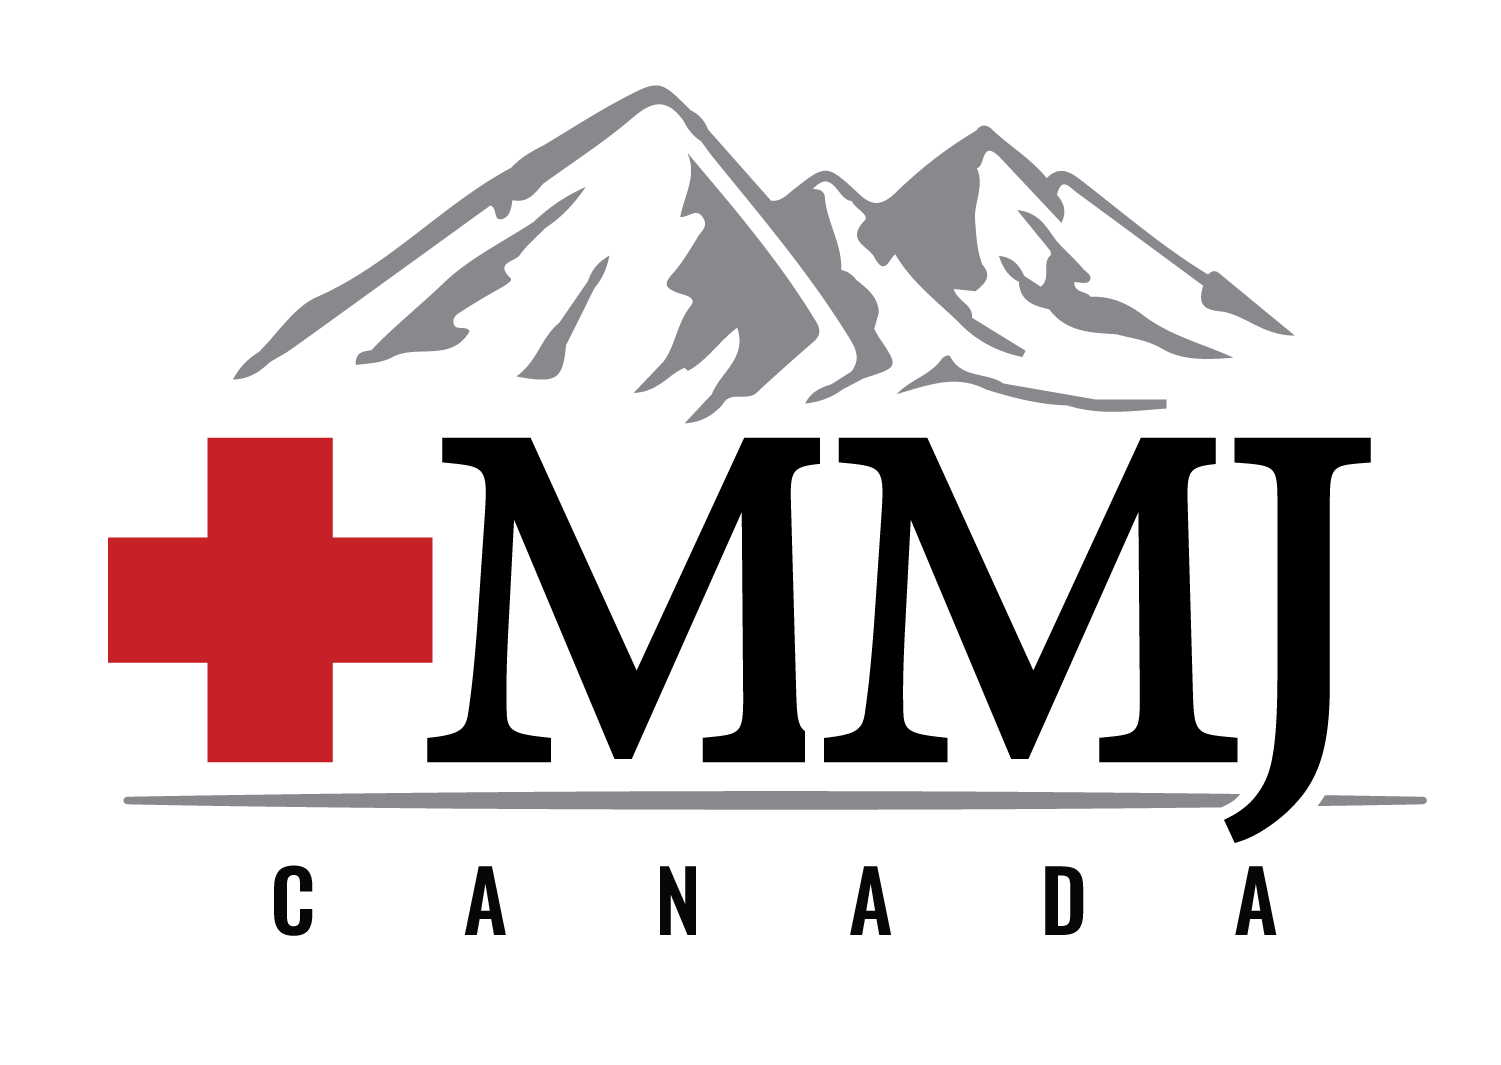 MMJ logo - Medical Cannabis Website.